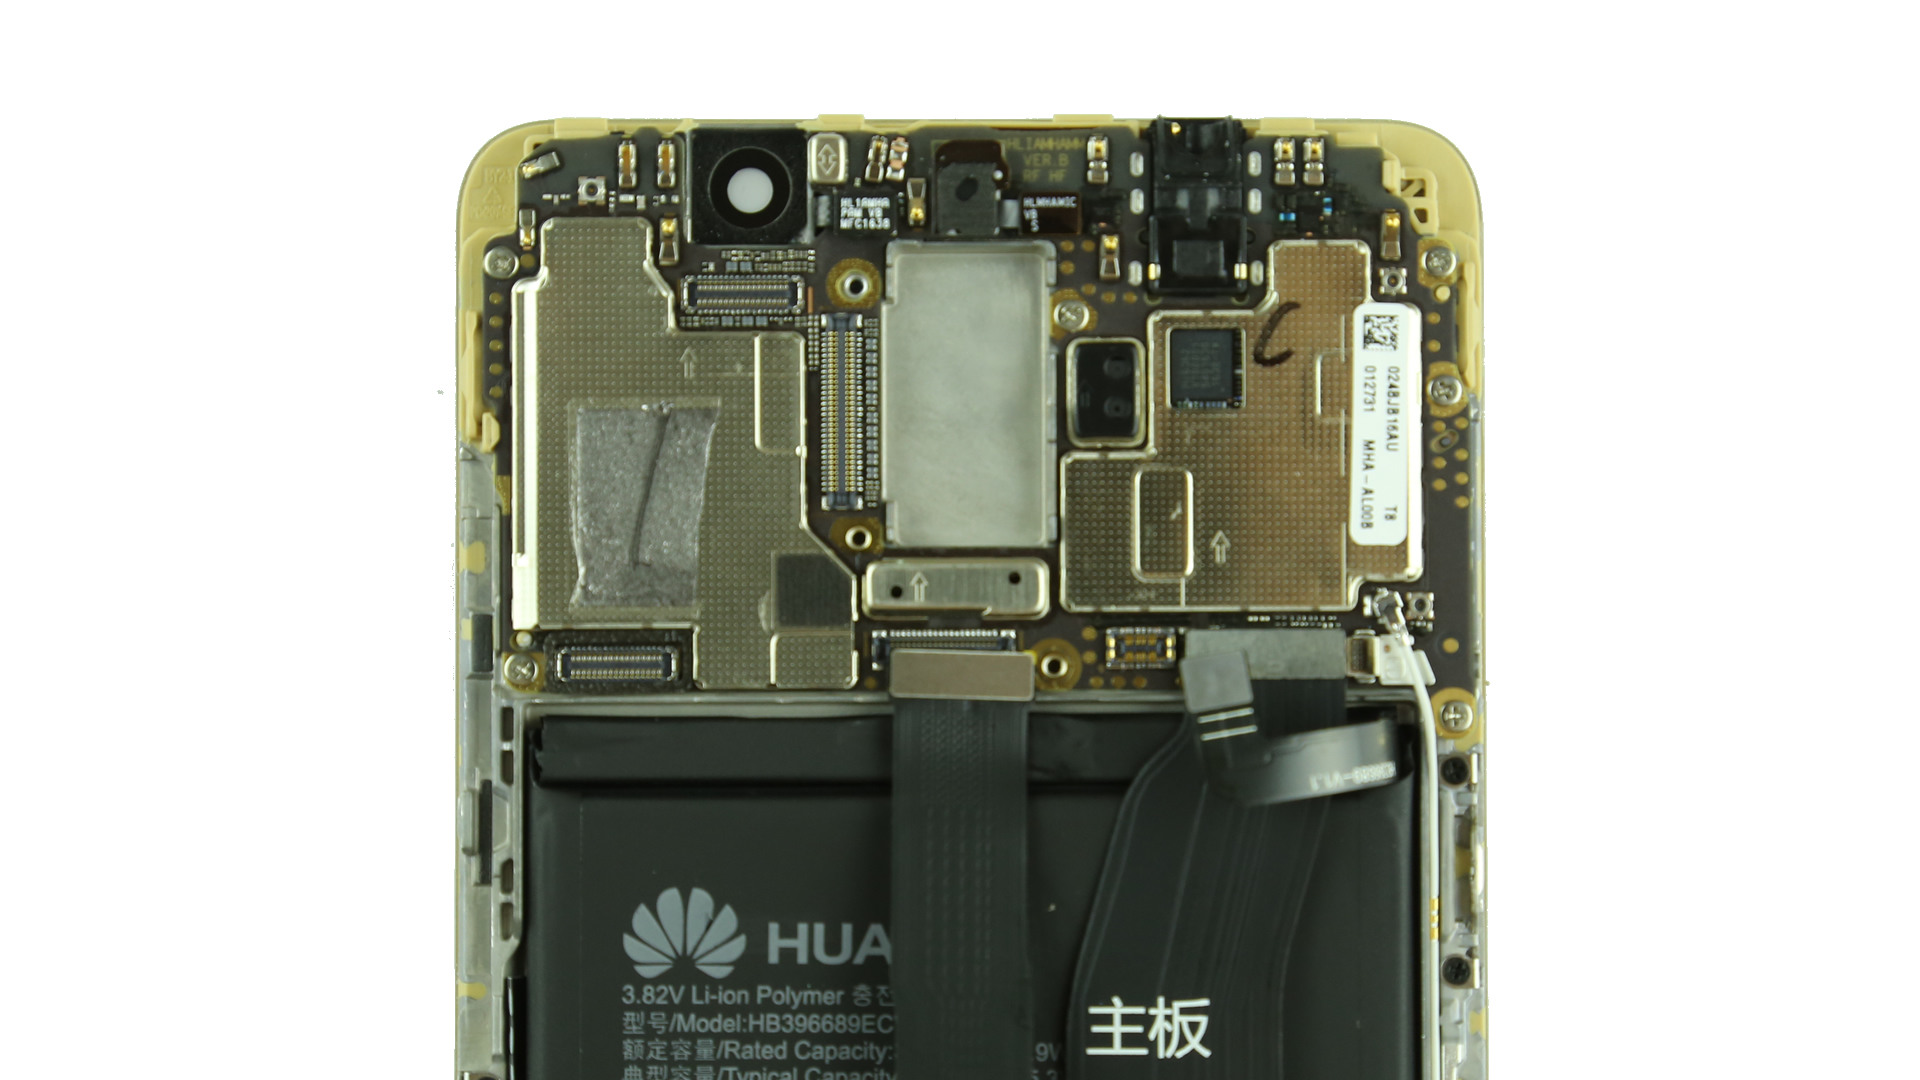 Huawei Mate 9 Teardown - Laptopmain.com